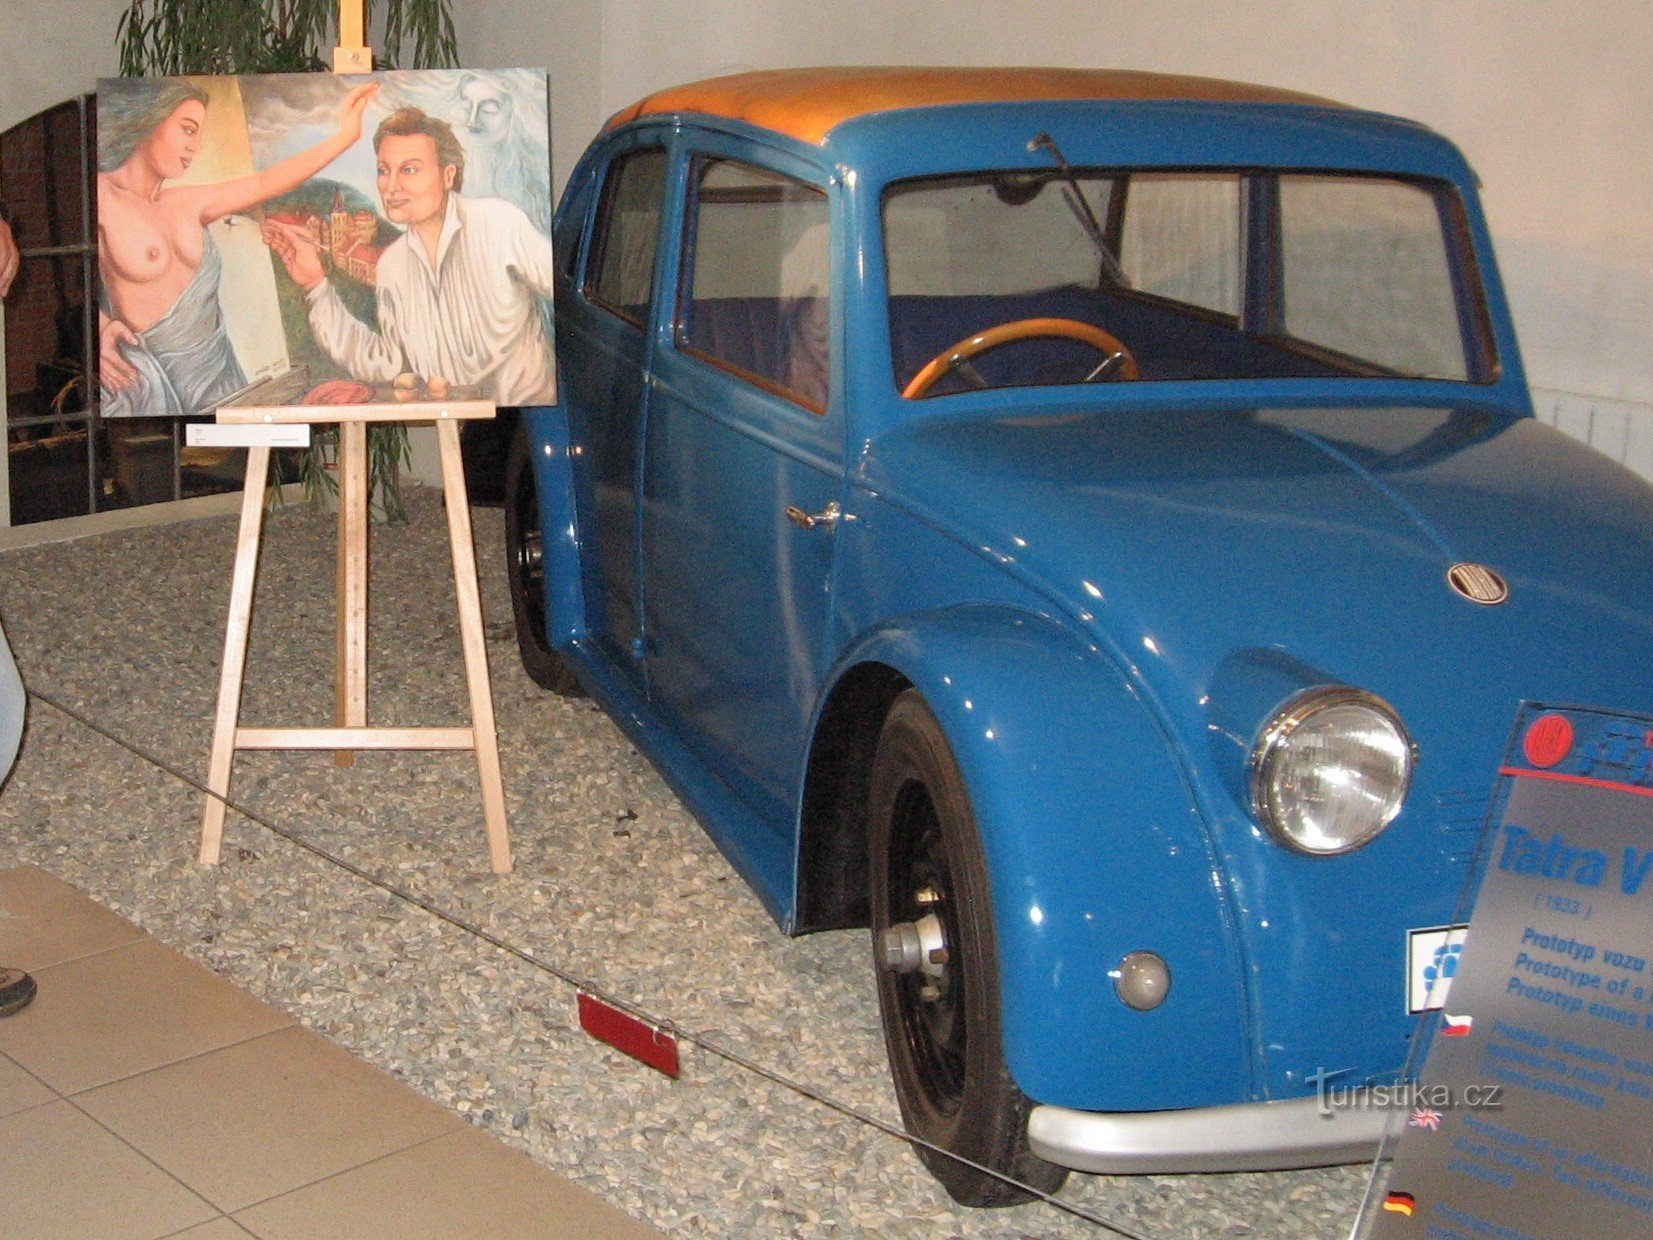 Kopřivnice - Museo Técnico Tatra - Mayo 2012